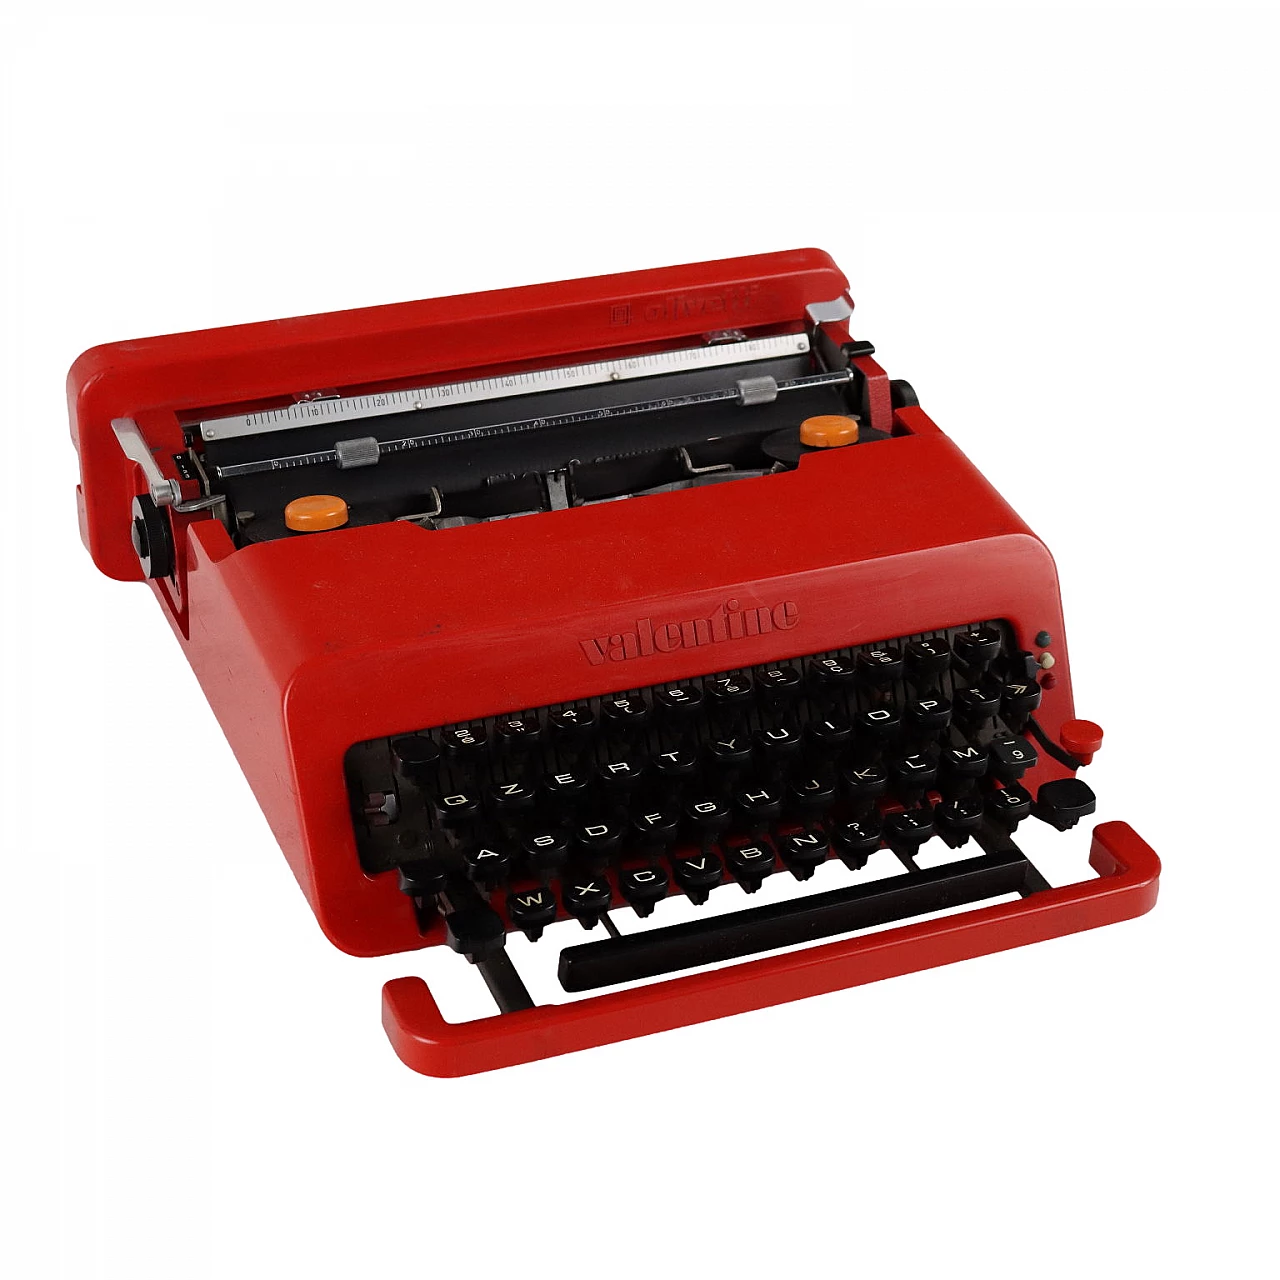 Valentine typewriter by Ettore Sottsass for Olivetti 1